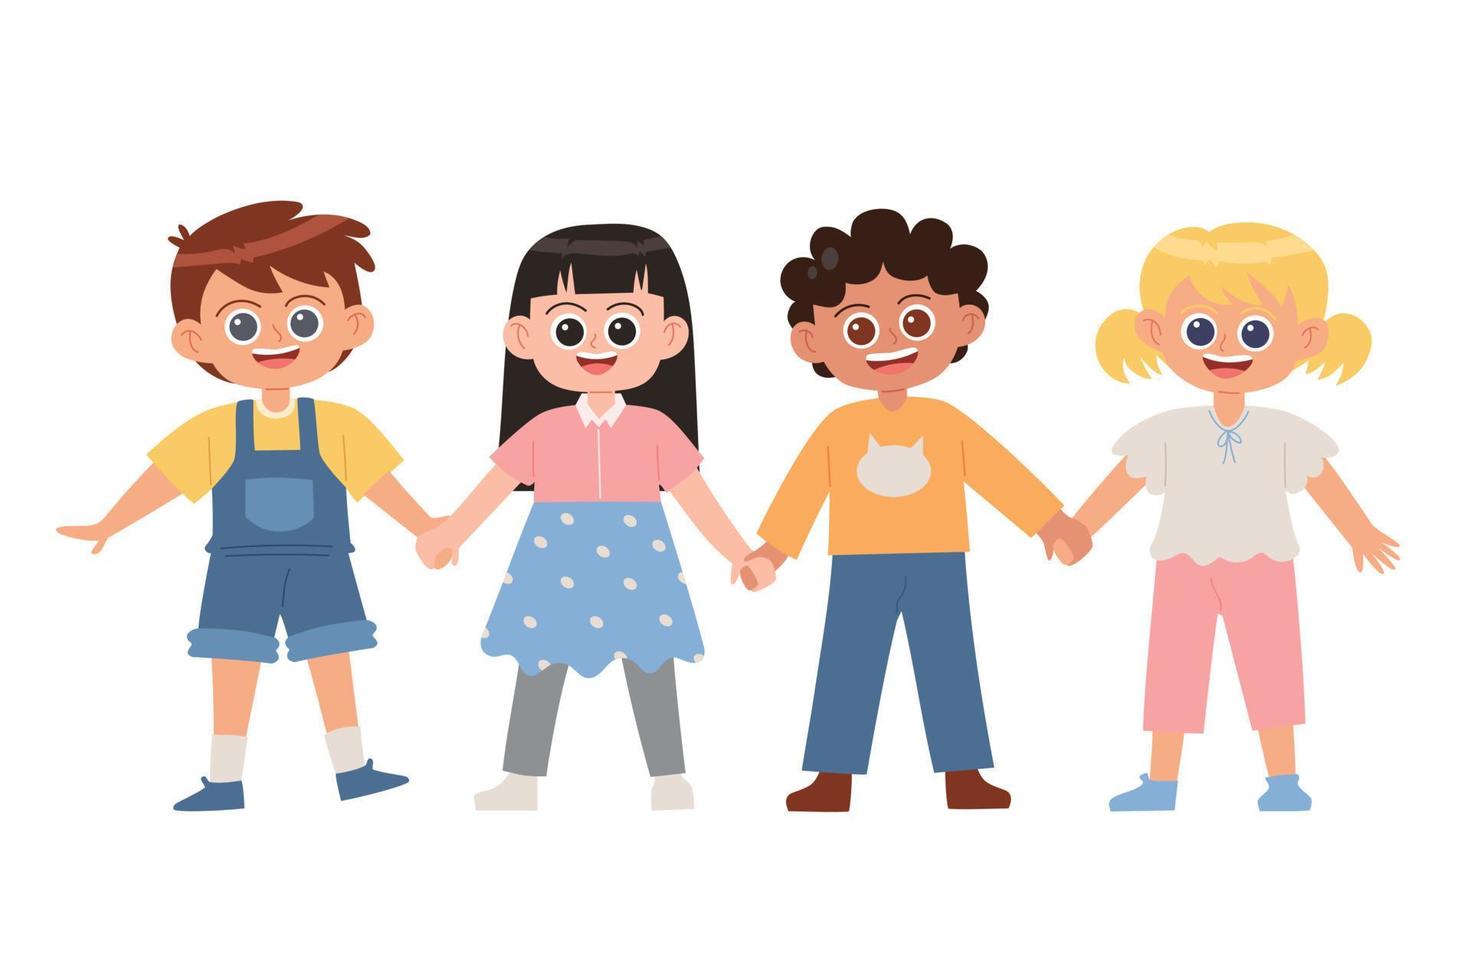 Cute children holding hands together cartoon vector